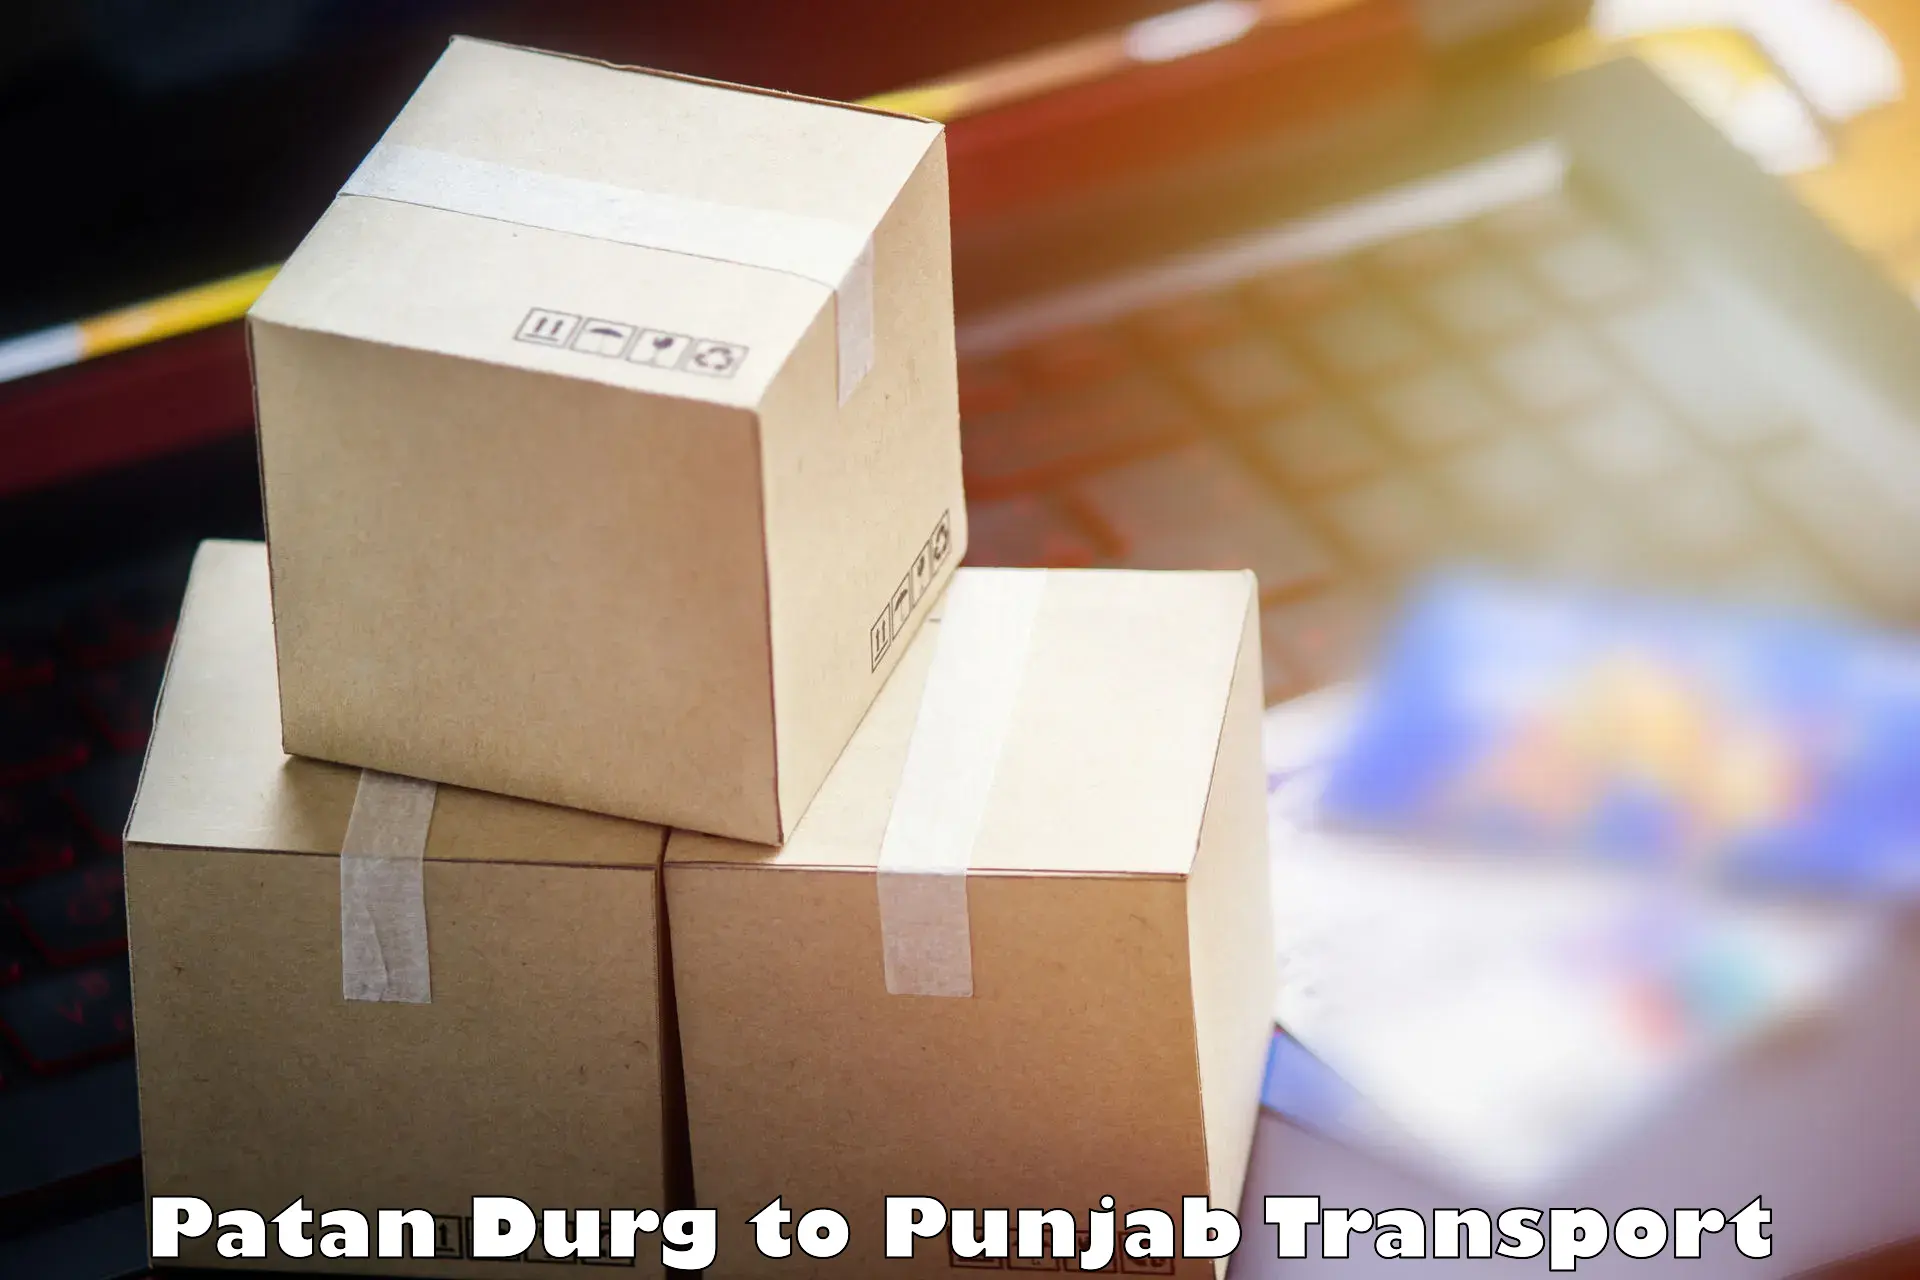 Goods delivery service Patan Durg to Dinanagar